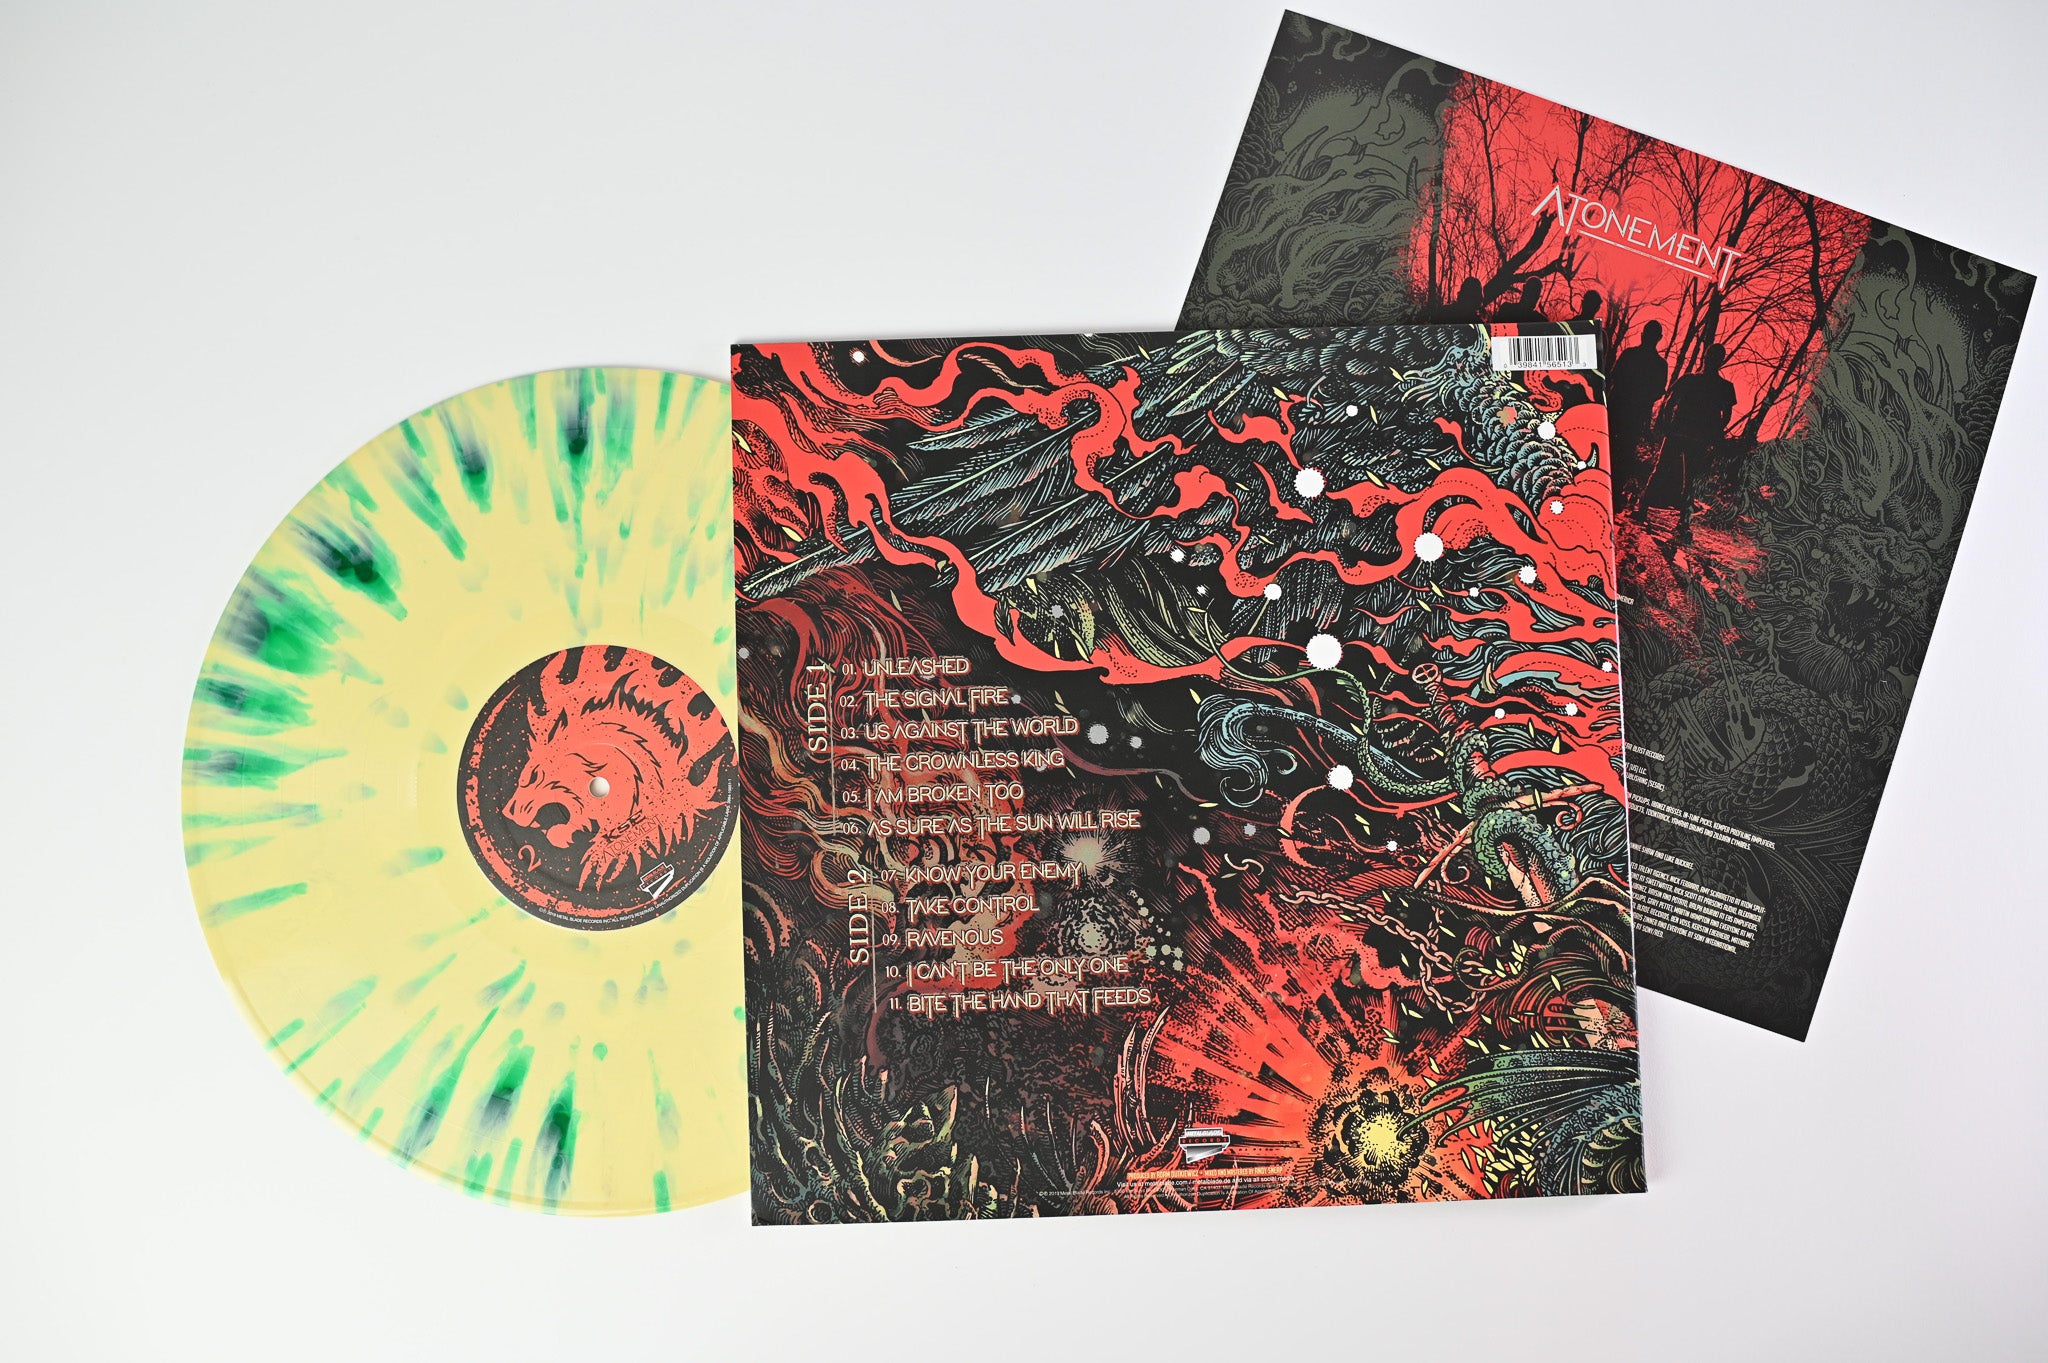 Killswitch Engage - Atonement on Metal Blade Records Cream w/ Green Splatter Vinyl